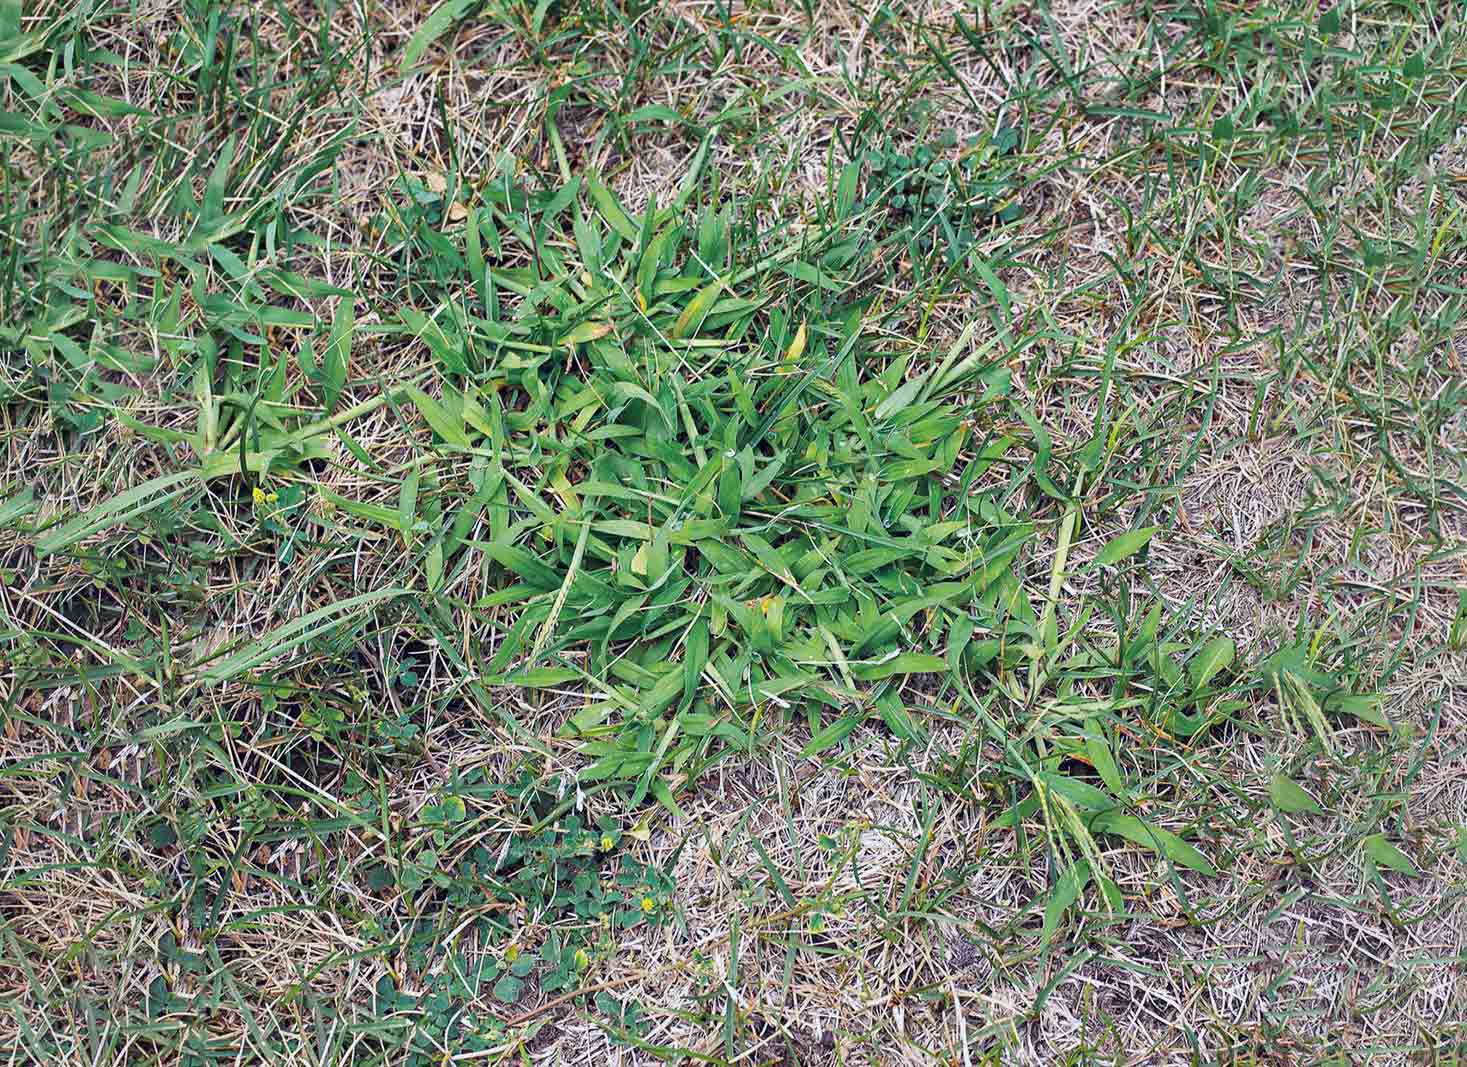 Factors influencing healthy grass reproduction